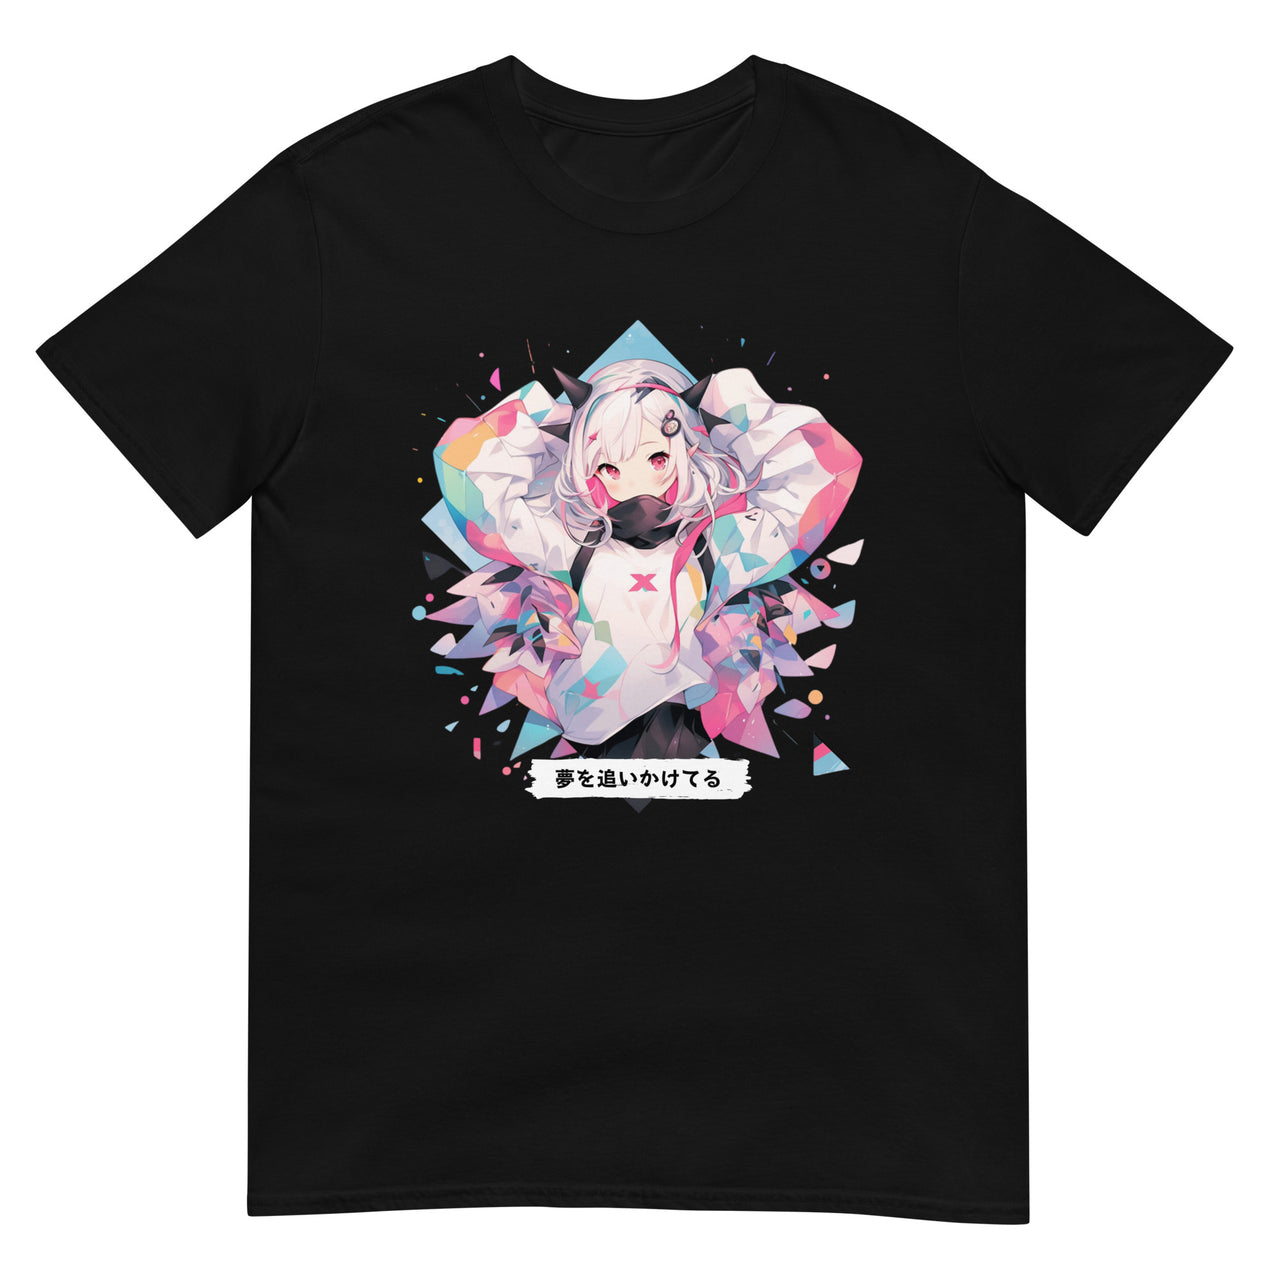 Chasing Dreams Geometric Anime T-Shirt